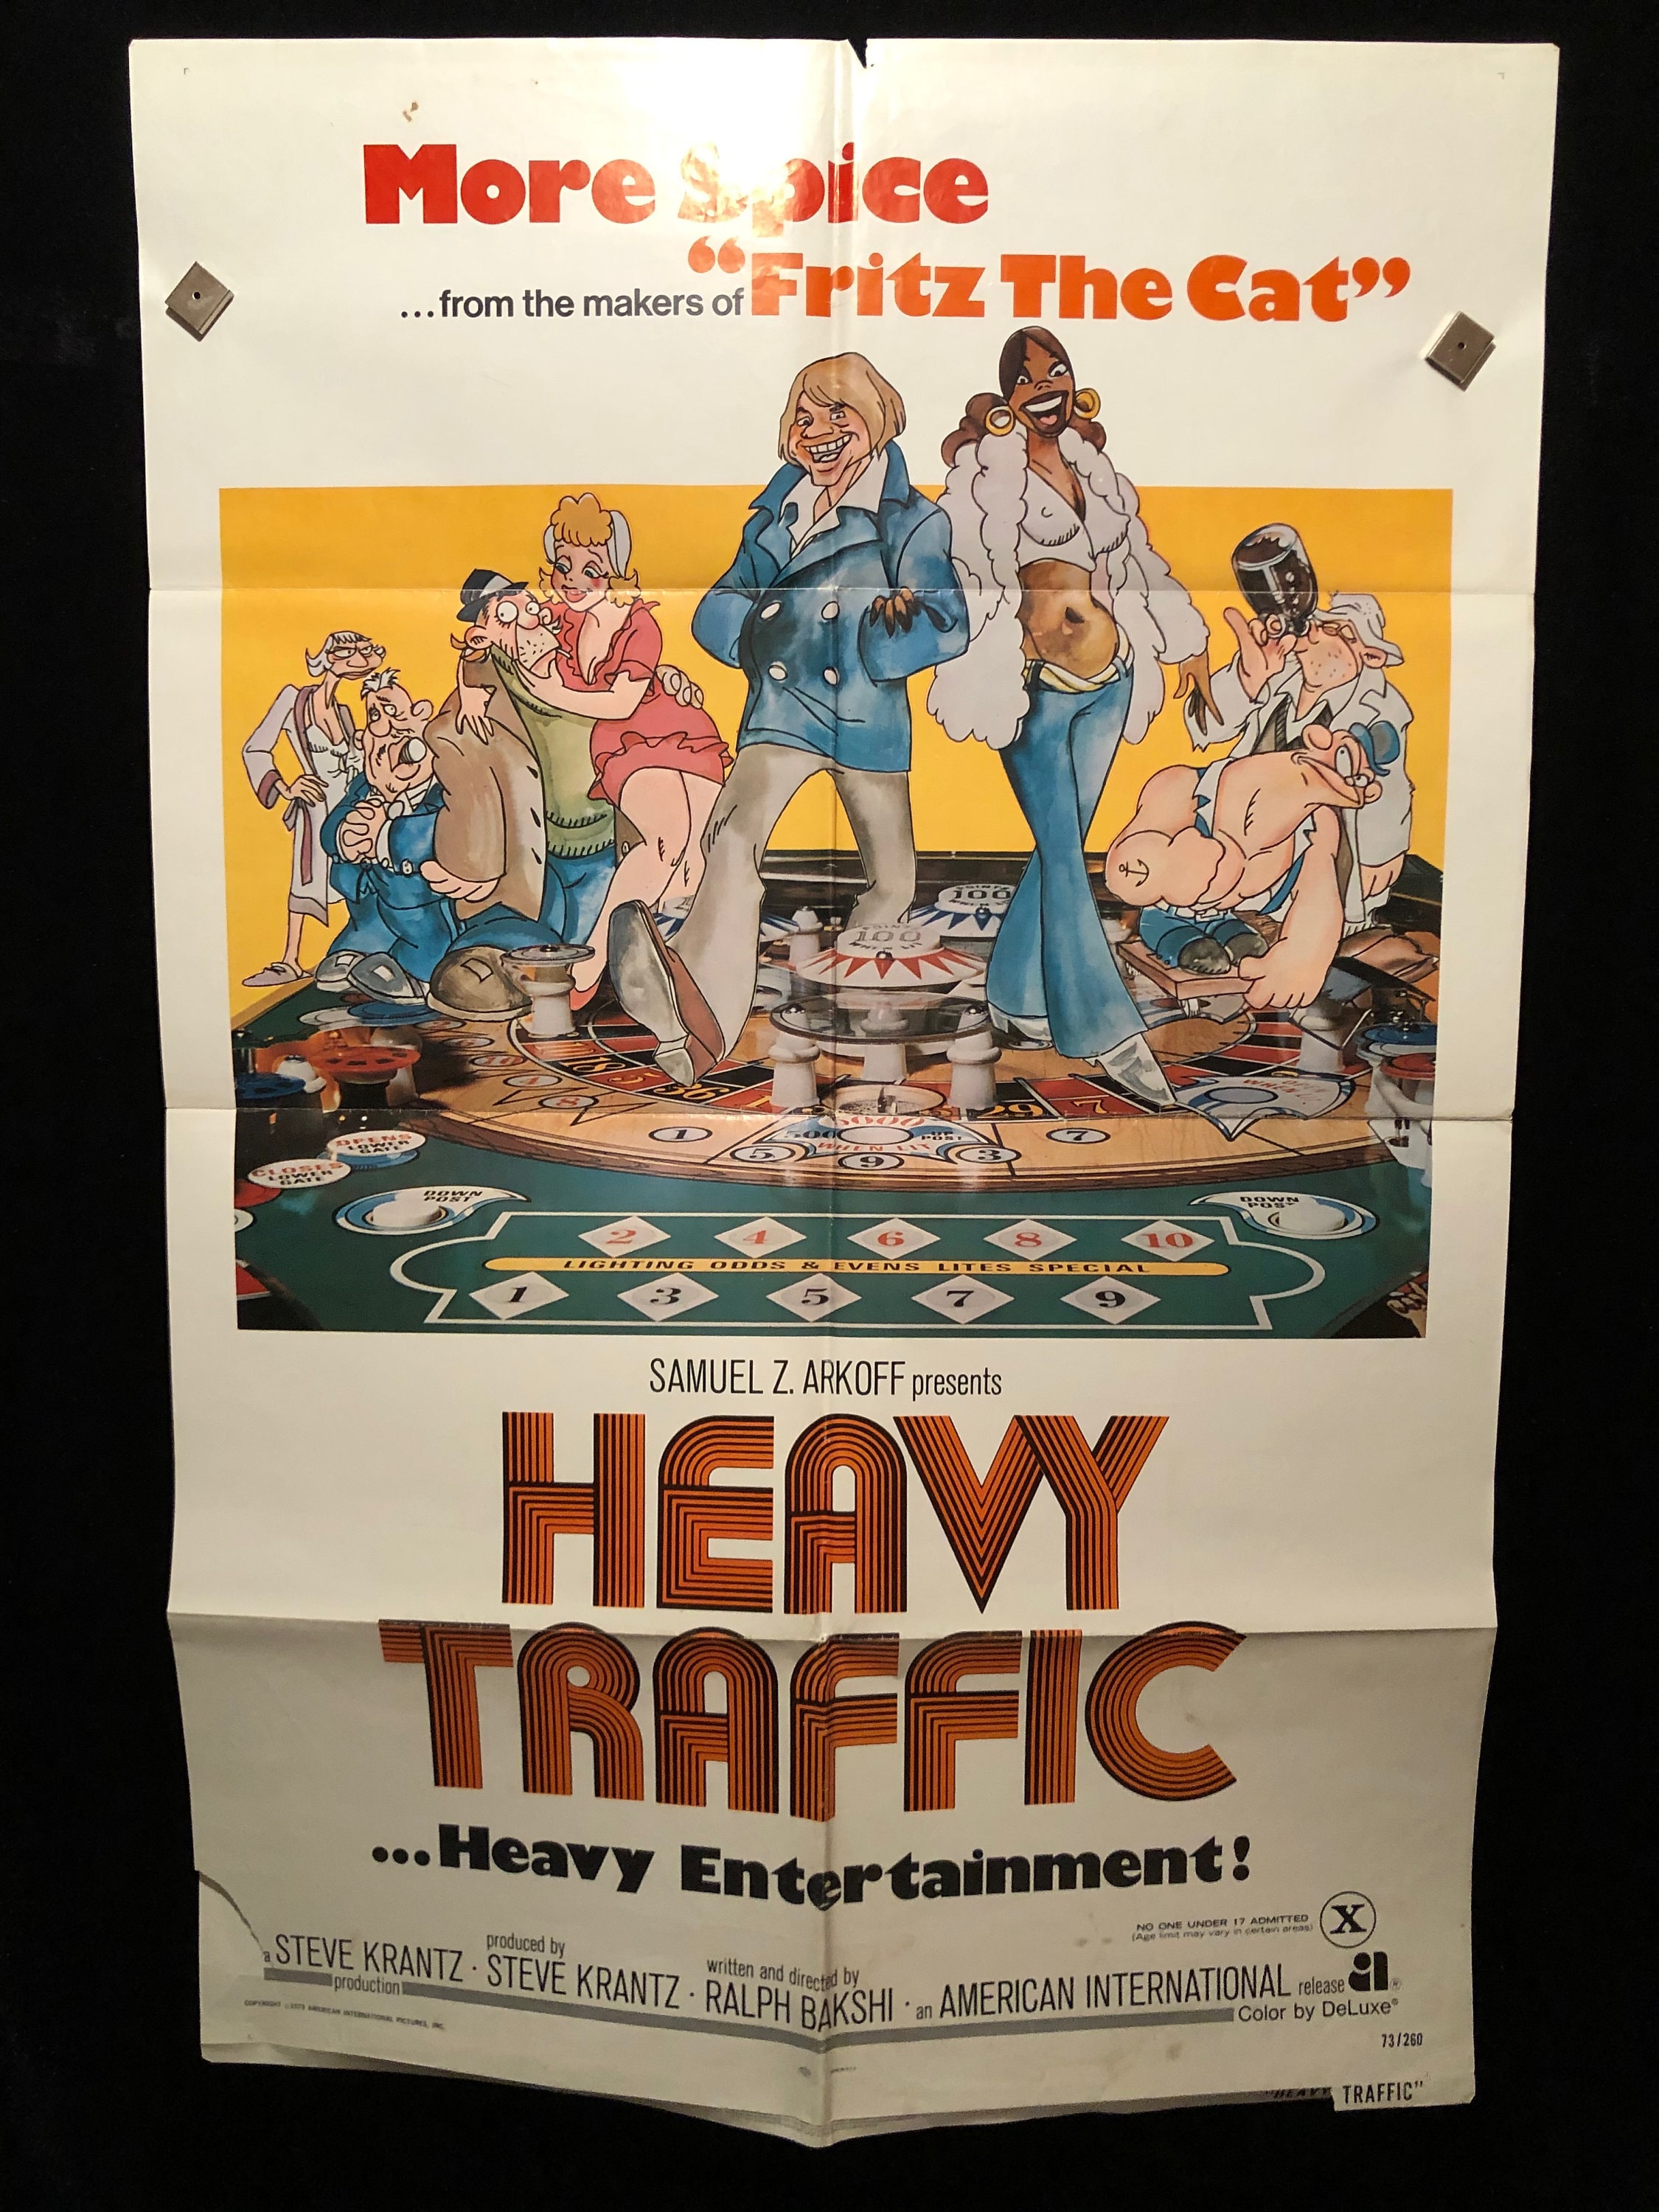 Cartoon Porn Posters - Original 1973 Heavy Traffic One Sheet Movie Poster Cartoon - Etsy